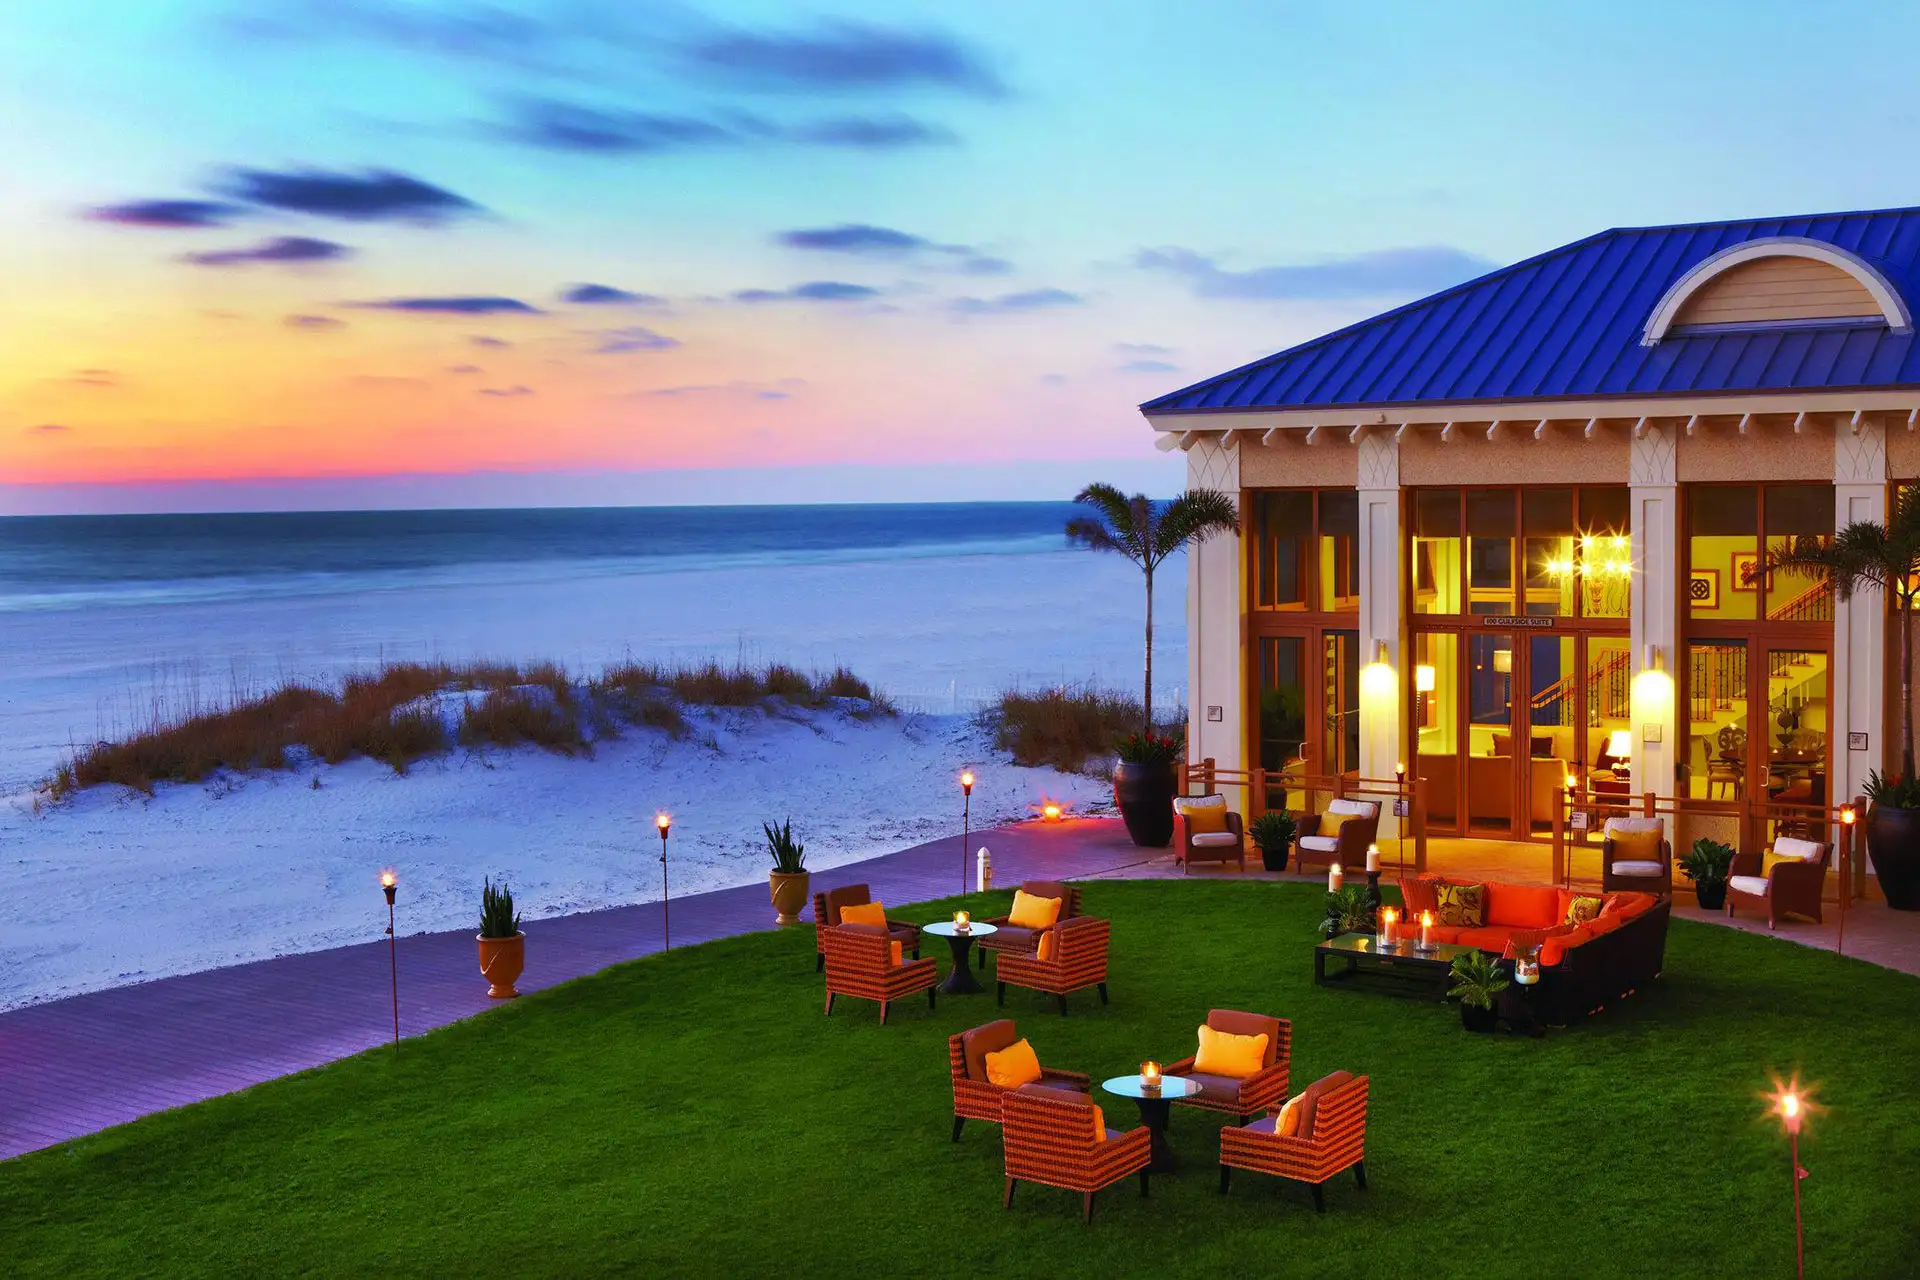 Sandpearl Resort in Clearwater, Florida